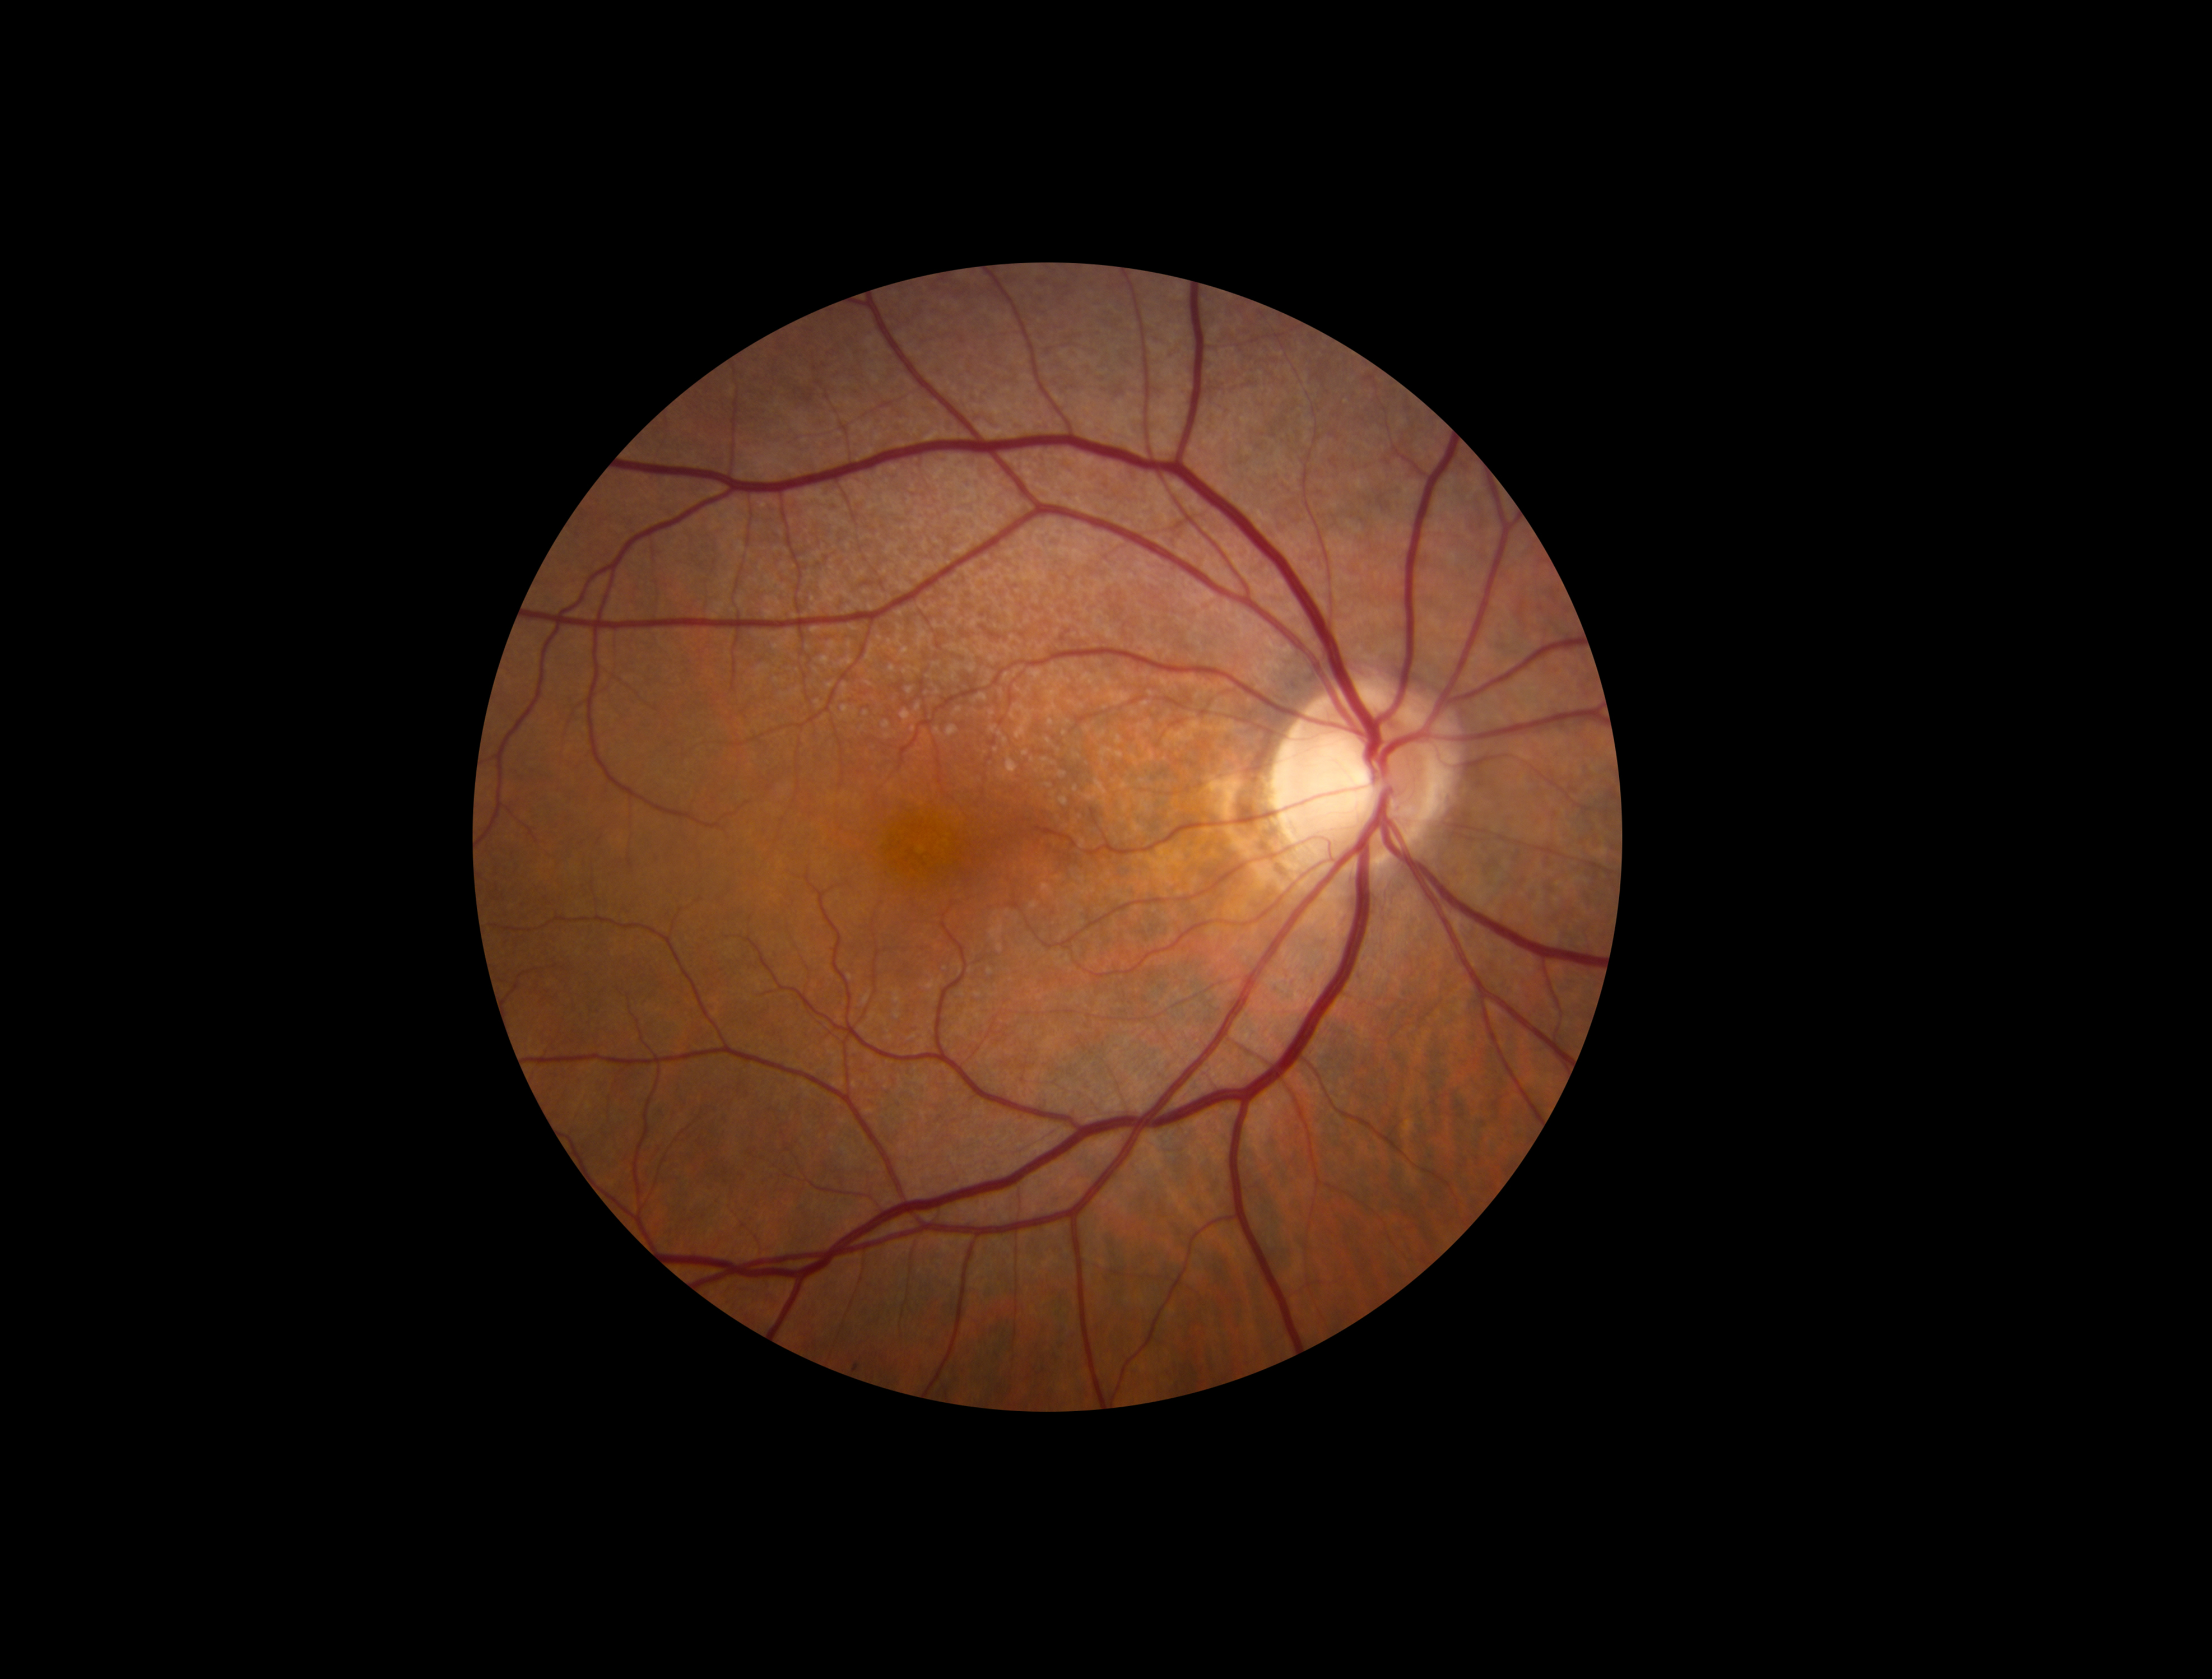 Image of retina with reticular pseudodrusen